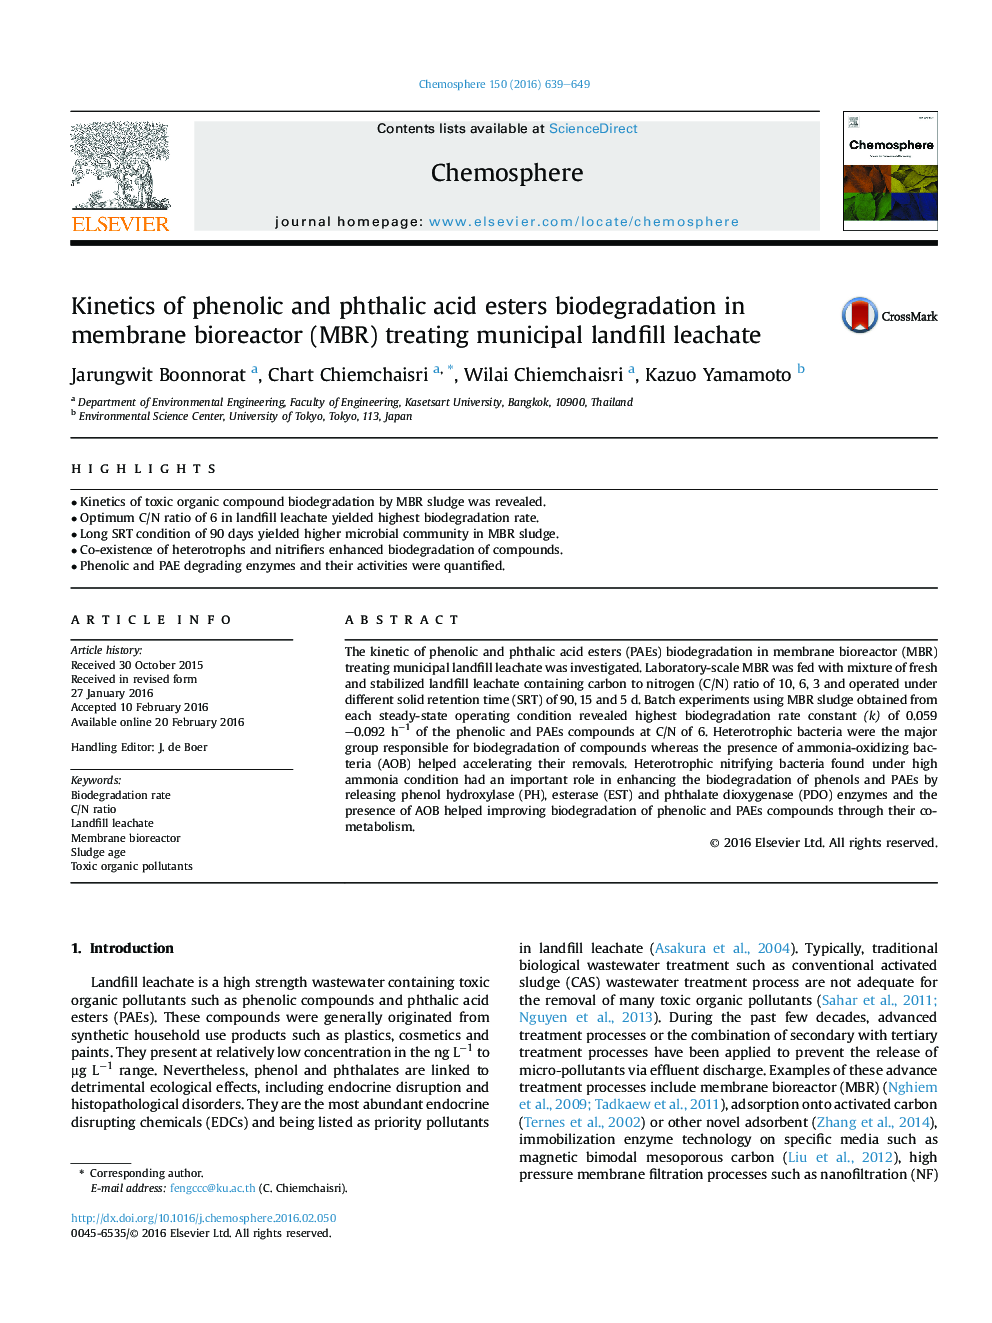 Kinetics of phenolic and phthalic acid esters biodegradation in membrane bioreactor (MBR) treating municipal landfill leachate